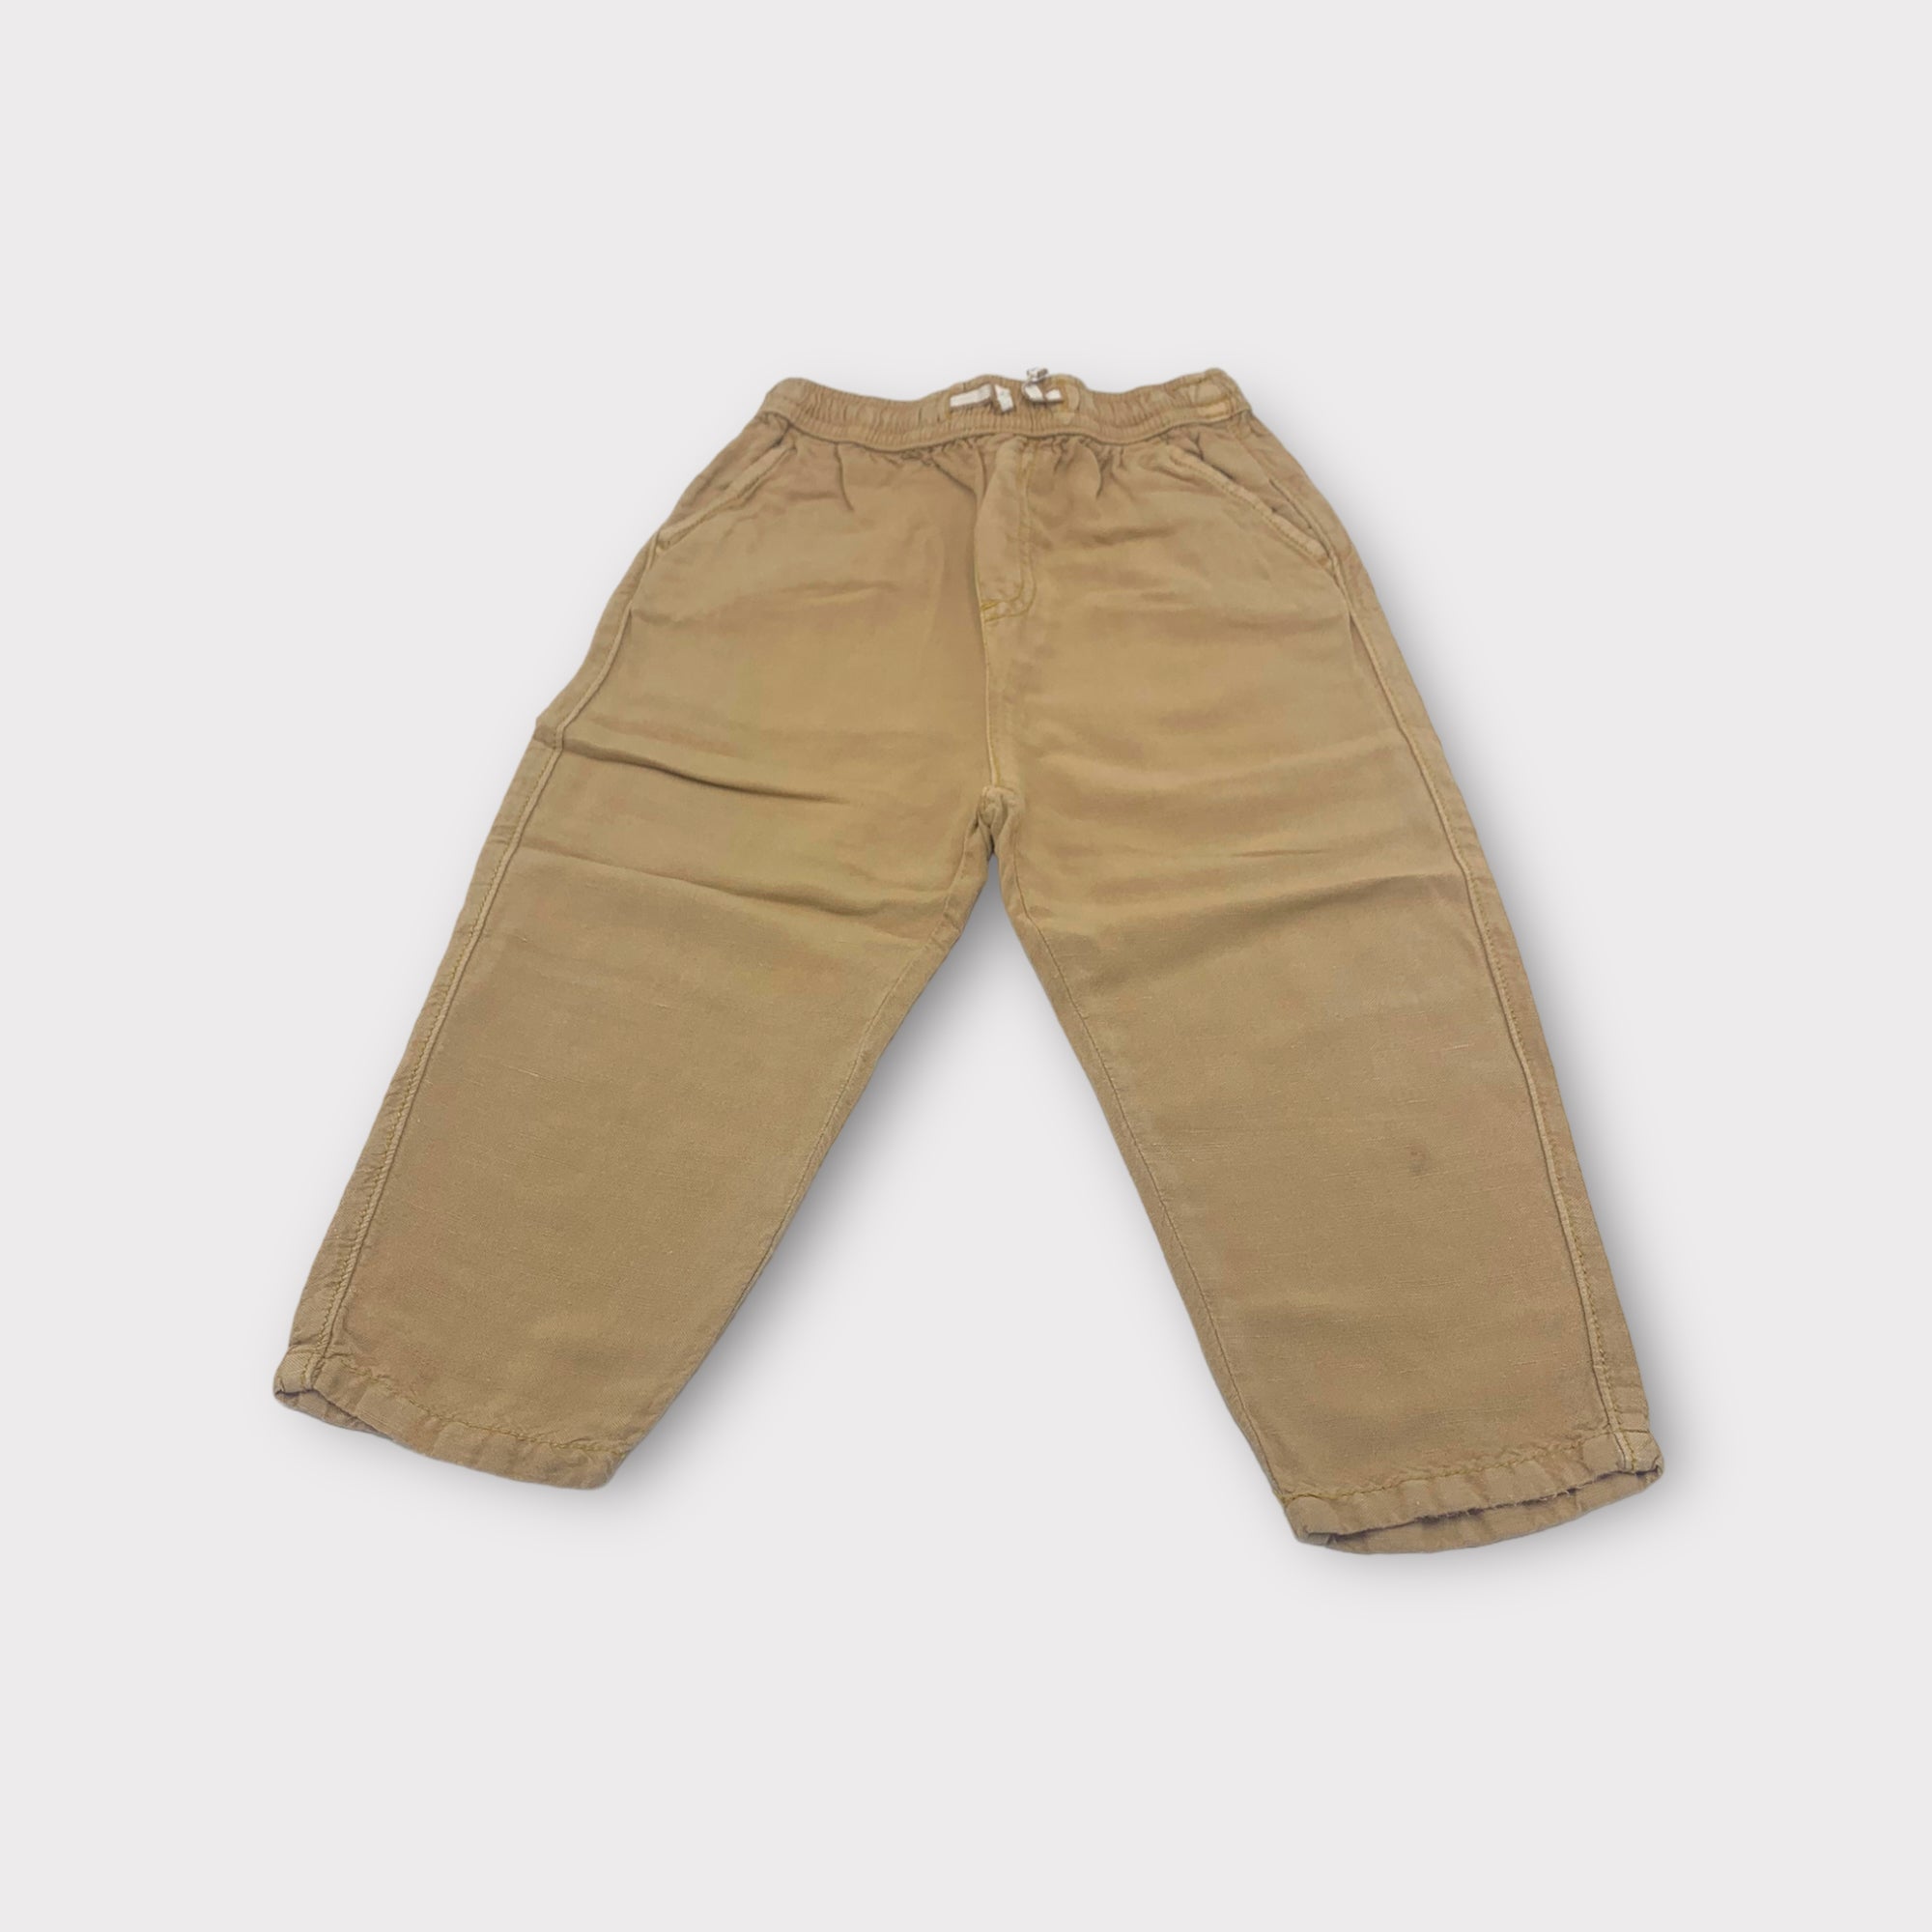 Pantalon Zara 2-3 ans 98 cm (petit défaut)